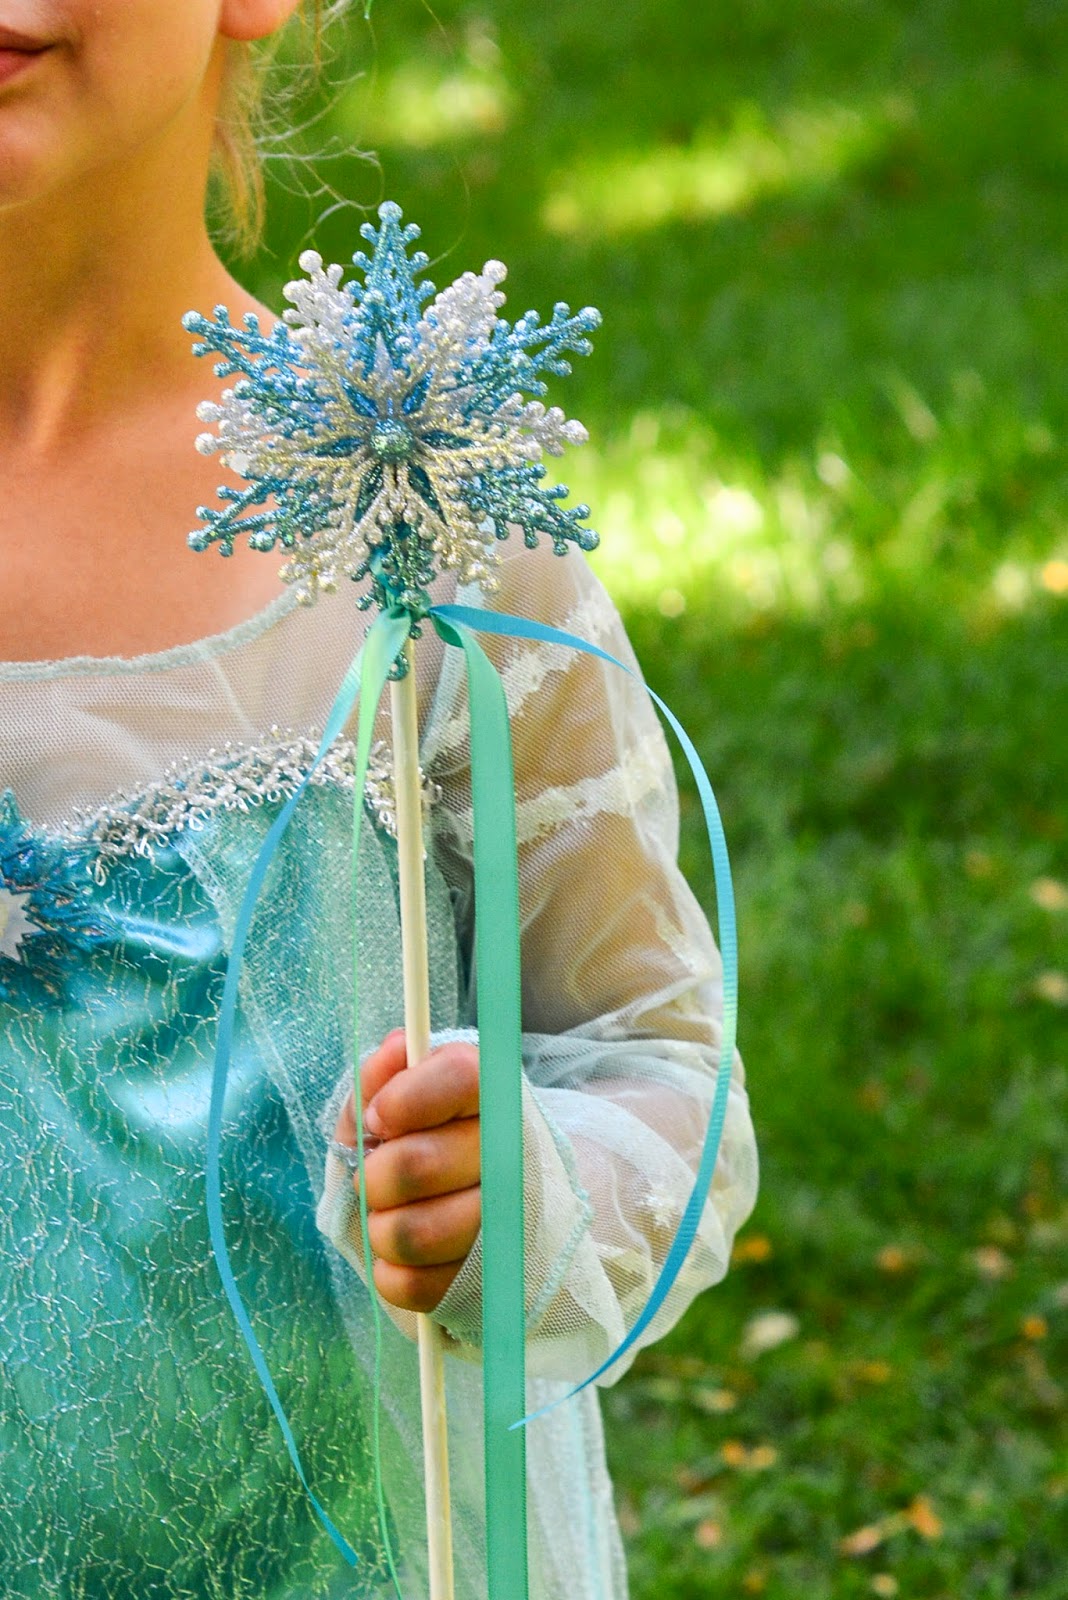 Frozen wand, Elsa Frozen wand inspired,Frozen Party Wands Party Favors – JO  SEASONS CRAFTS